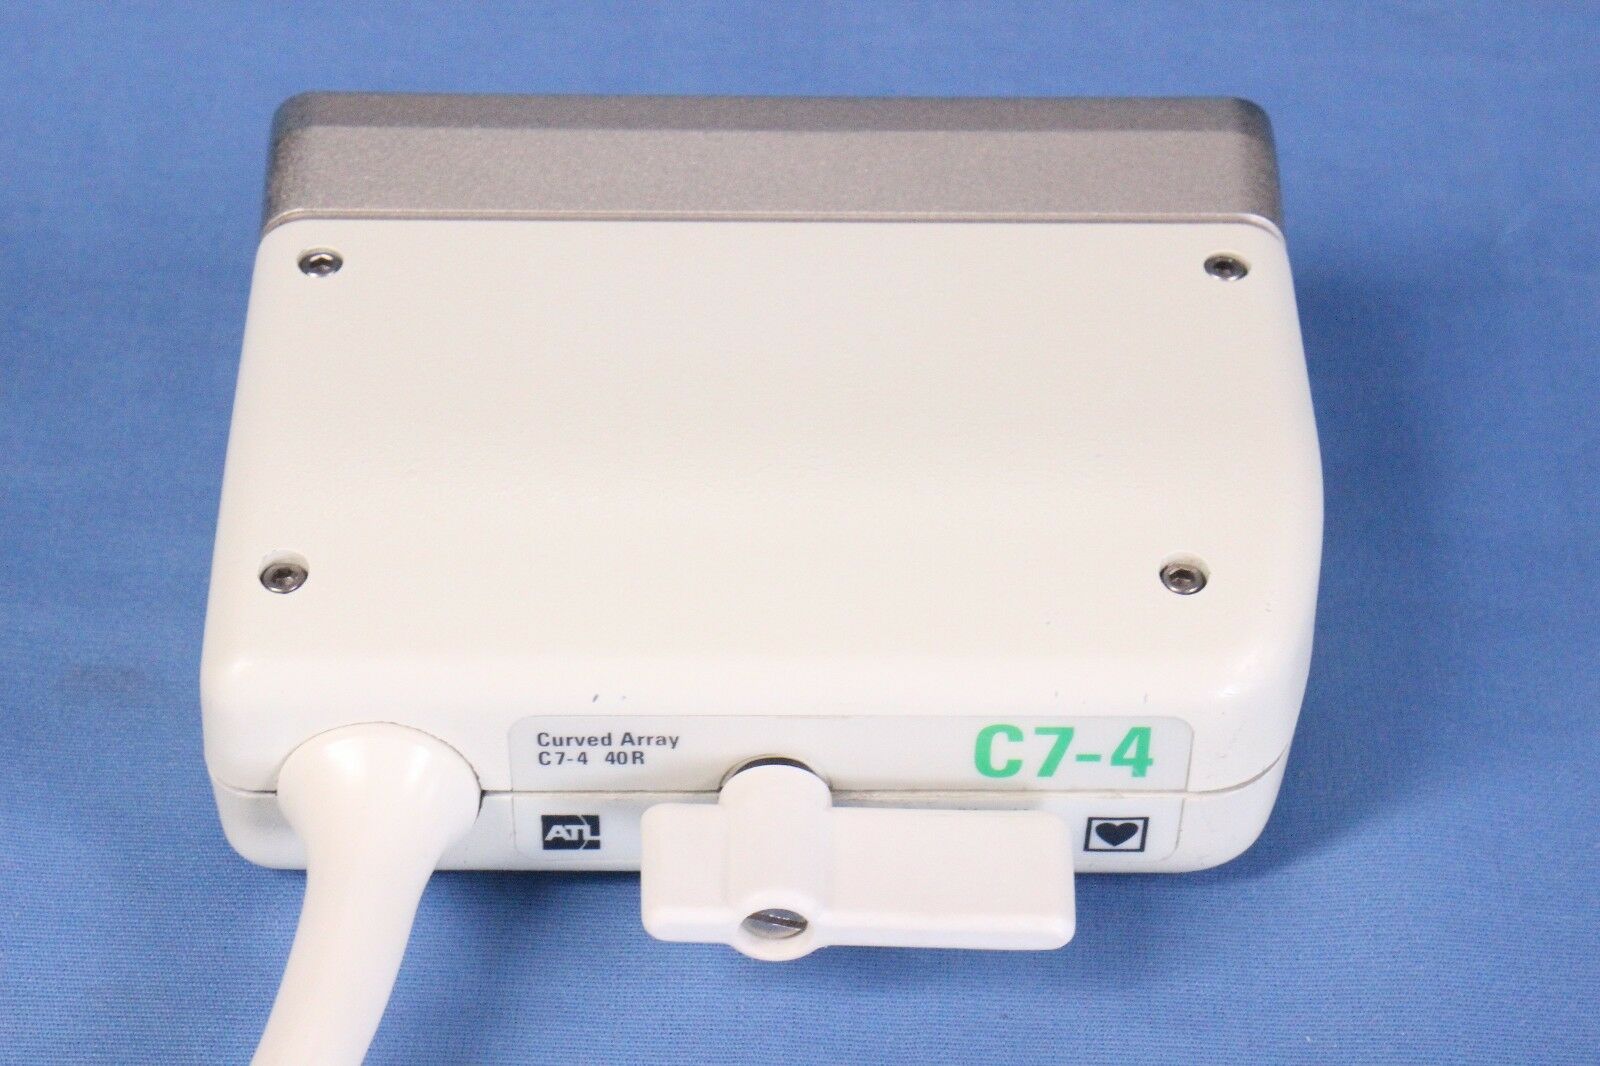 ATL C7-4 Curved Array Ultrasound Probe Philips Ultrasound Transducer w/ Warranty DIAGNOSTIC ULTRASOUND MACHINES FOR SALE